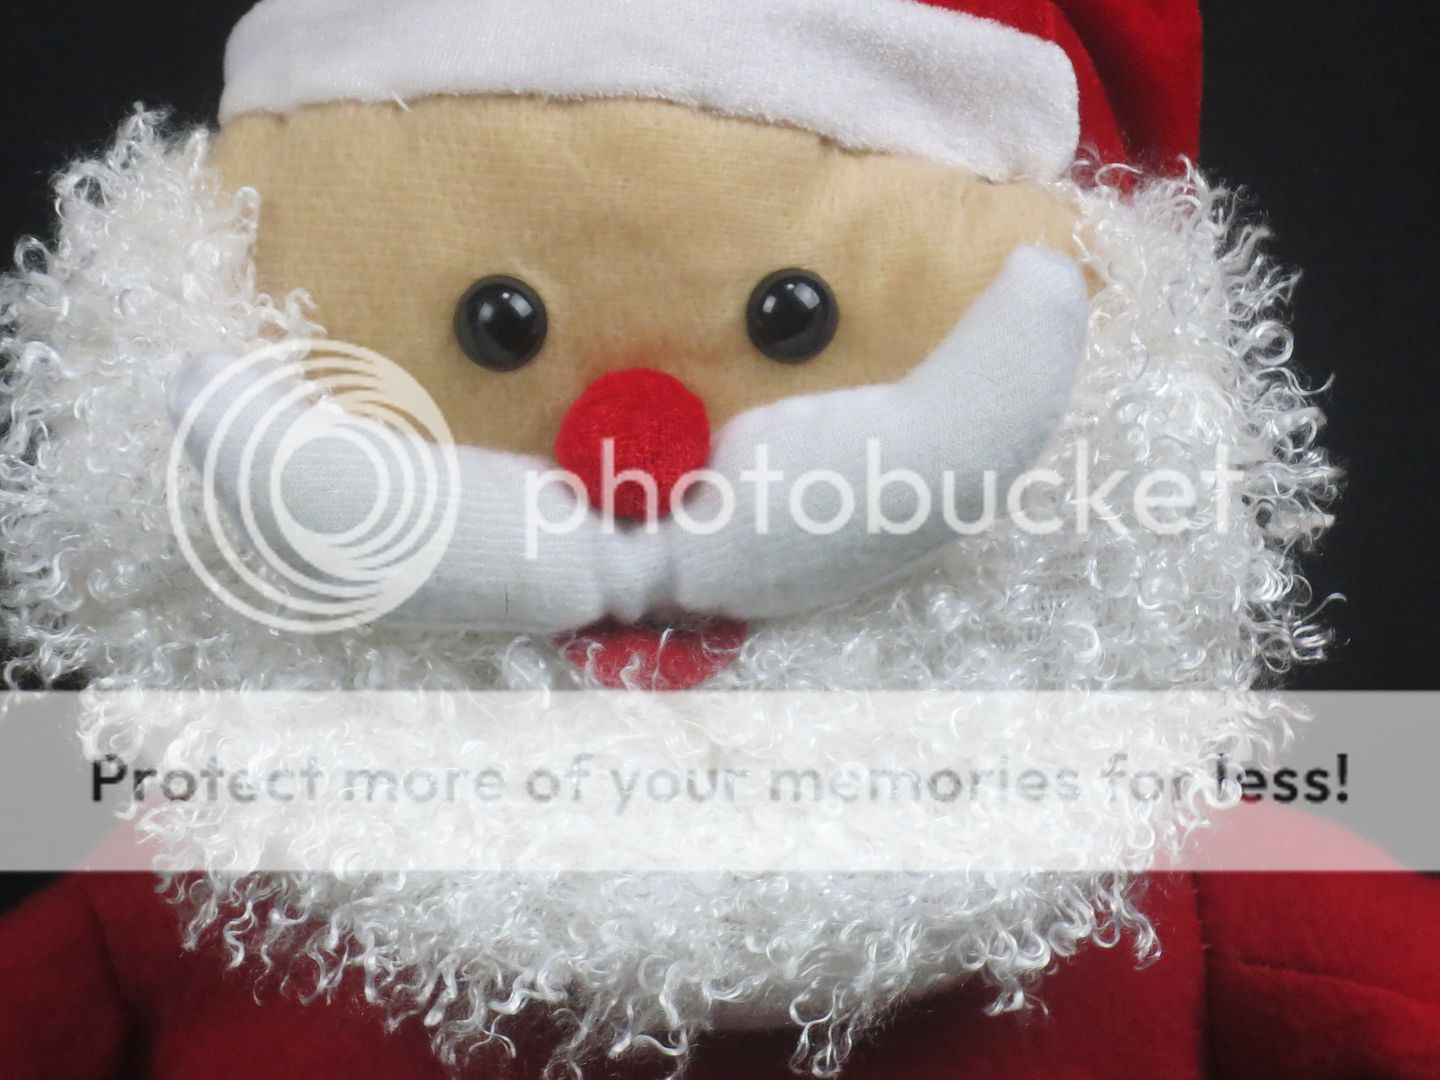 big stuffed santa claus